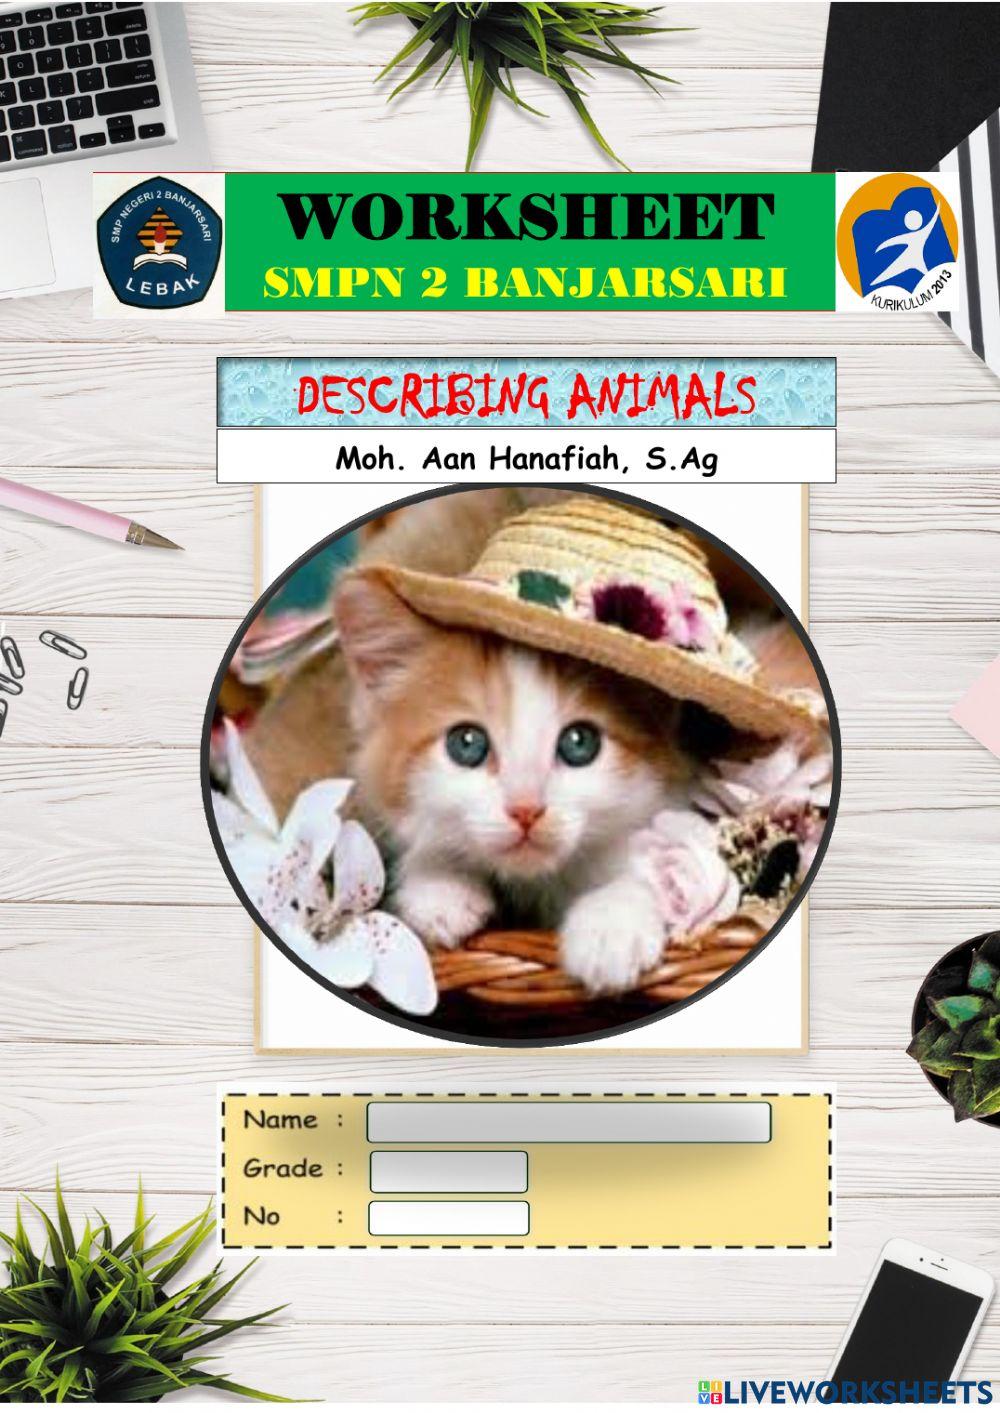 Worksheet-describing animals